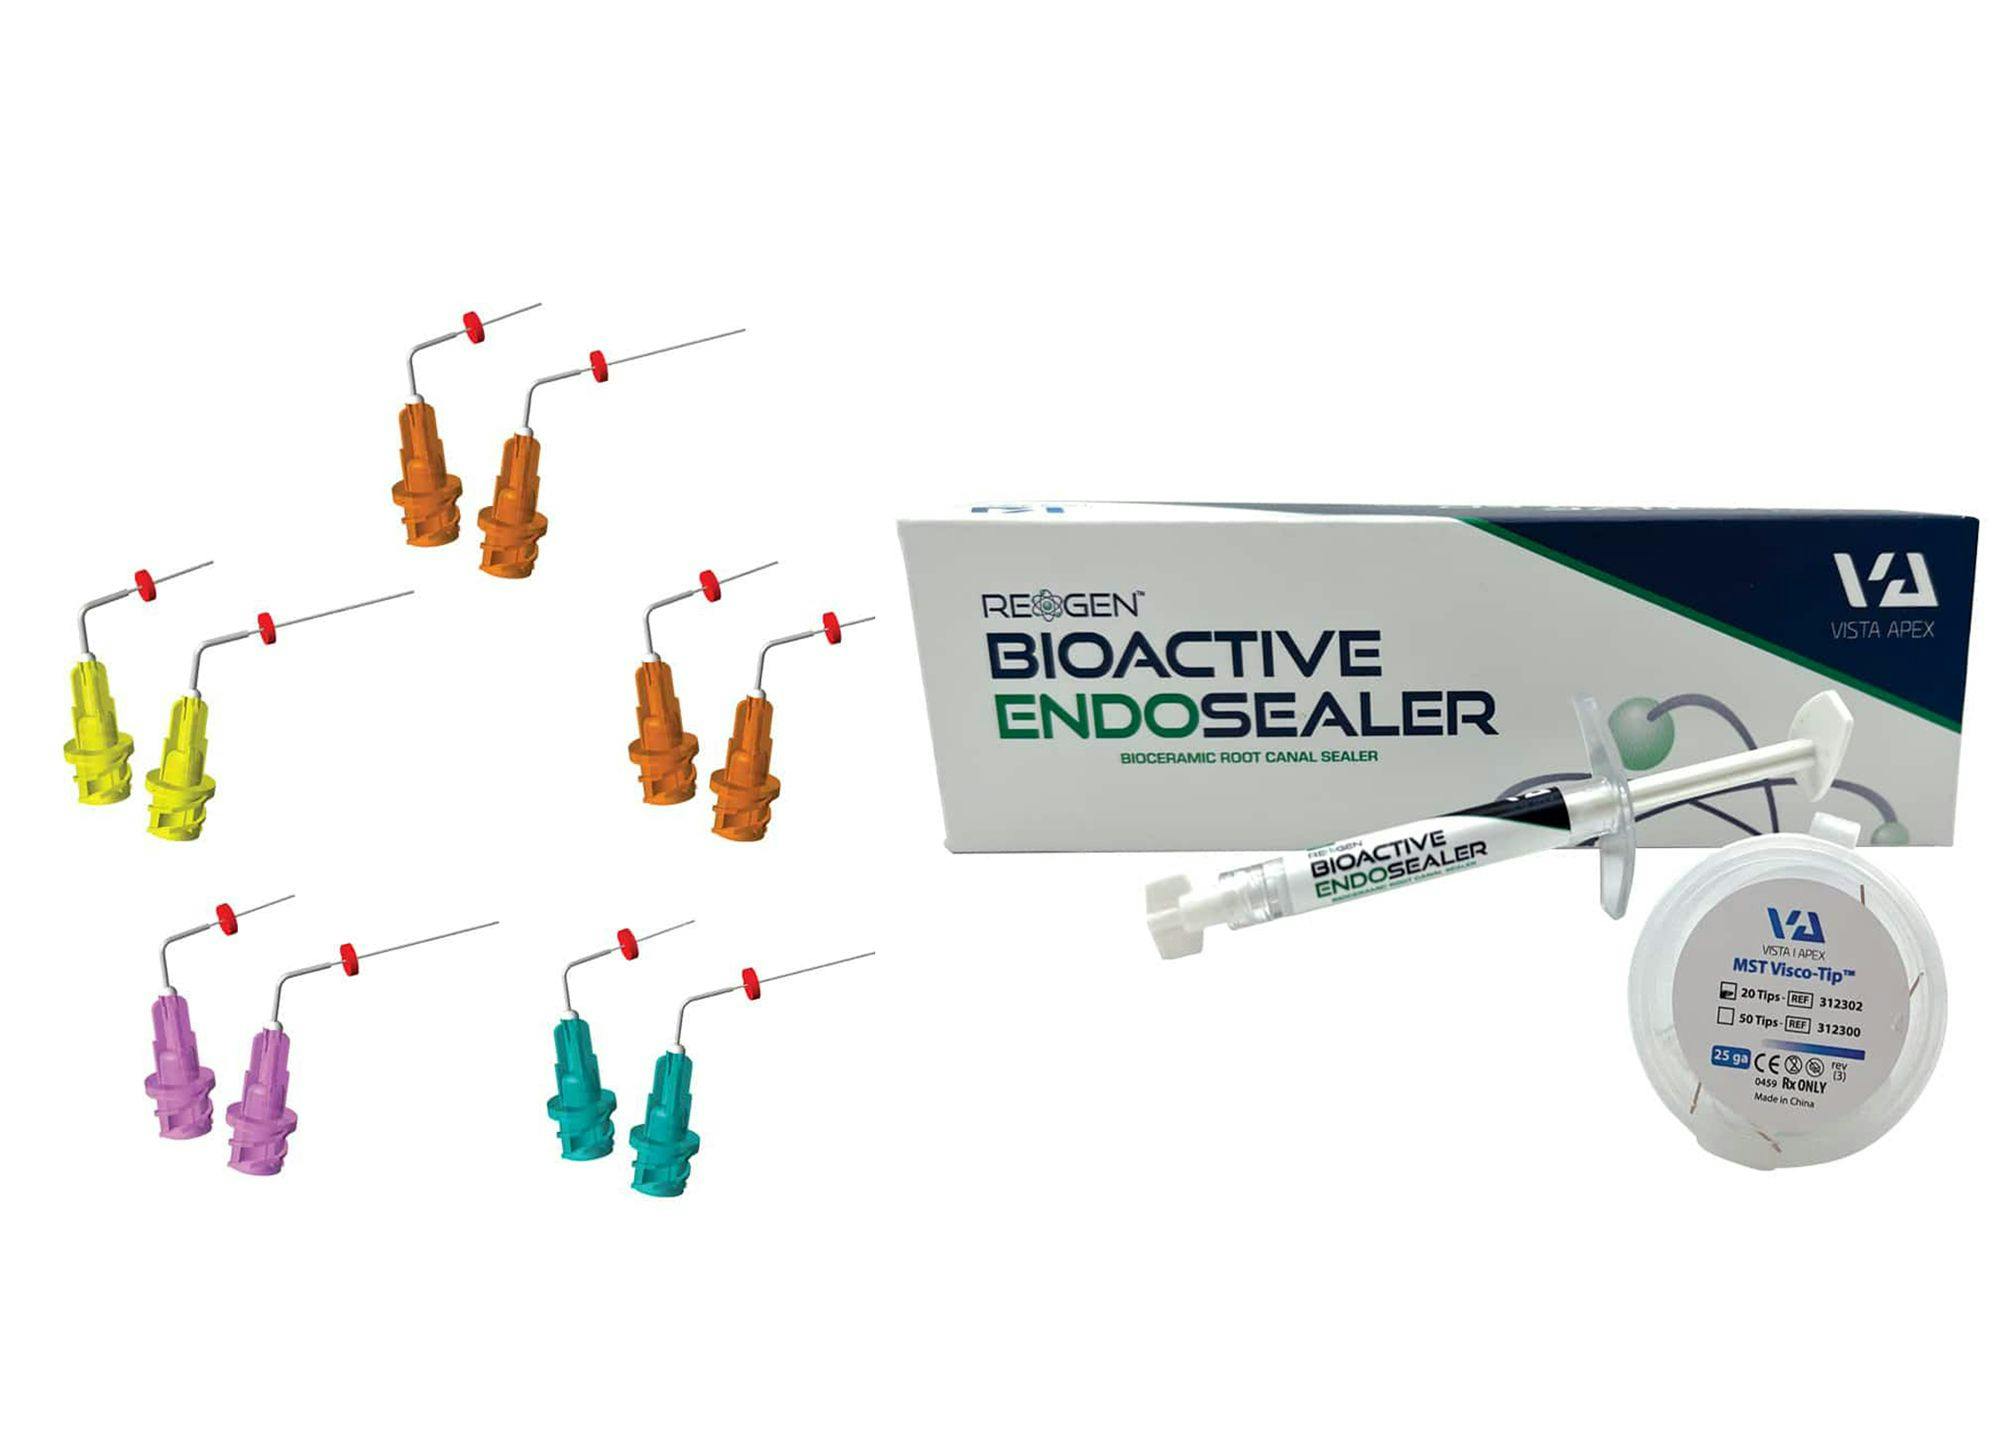 Vista Apex Launches Bioactive Endo Sealer and New Irrigating Tips. Image: © Vista Apex